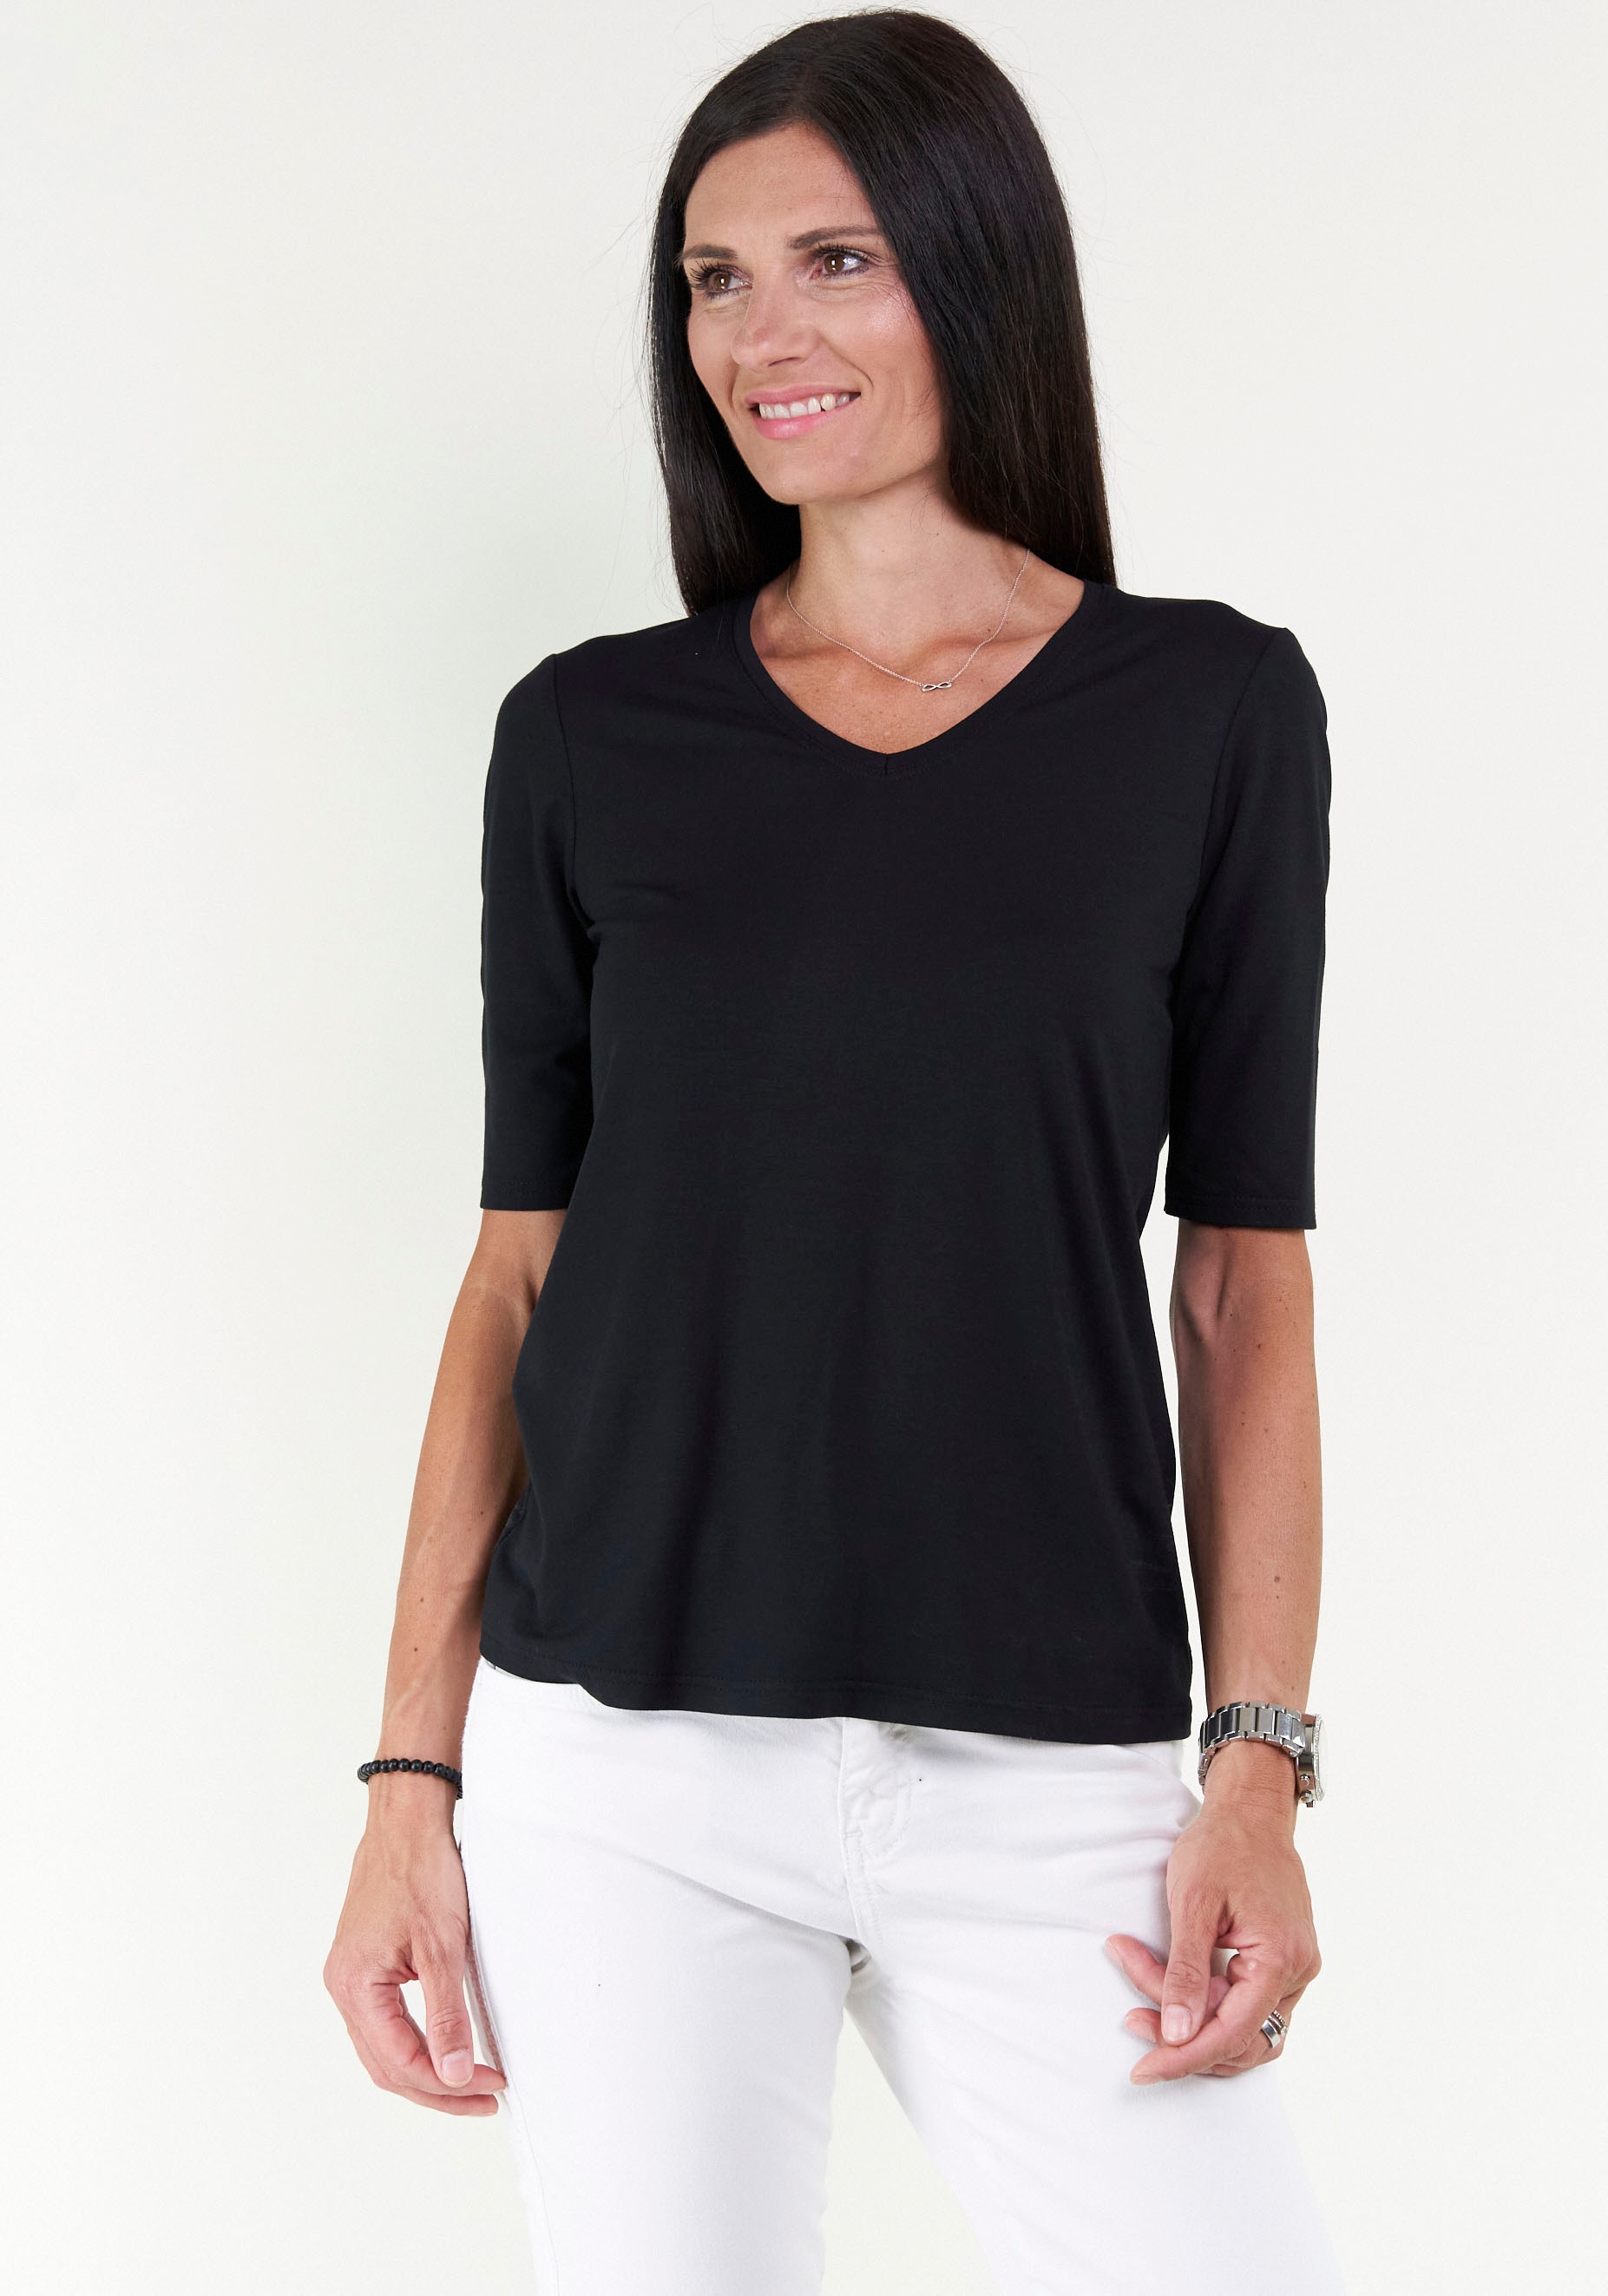 Seidel Moden V-Shirt, mit Halbarm aus softem Material, MADE IN GERMANY  online kaufen bei Jelmoli-Versand Schweiz